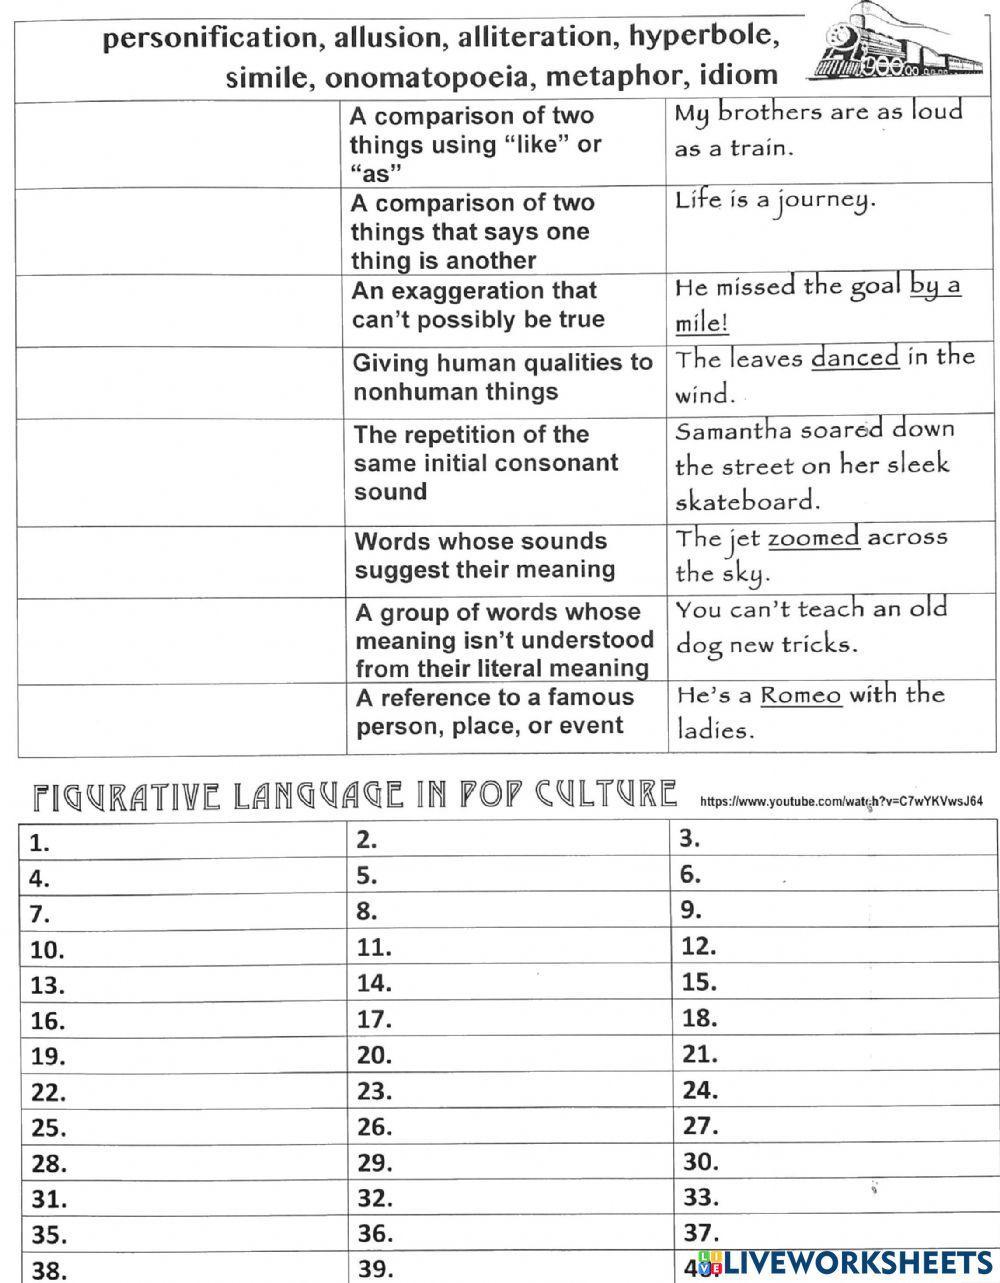 Identifying Figurative Language in Pop Culture